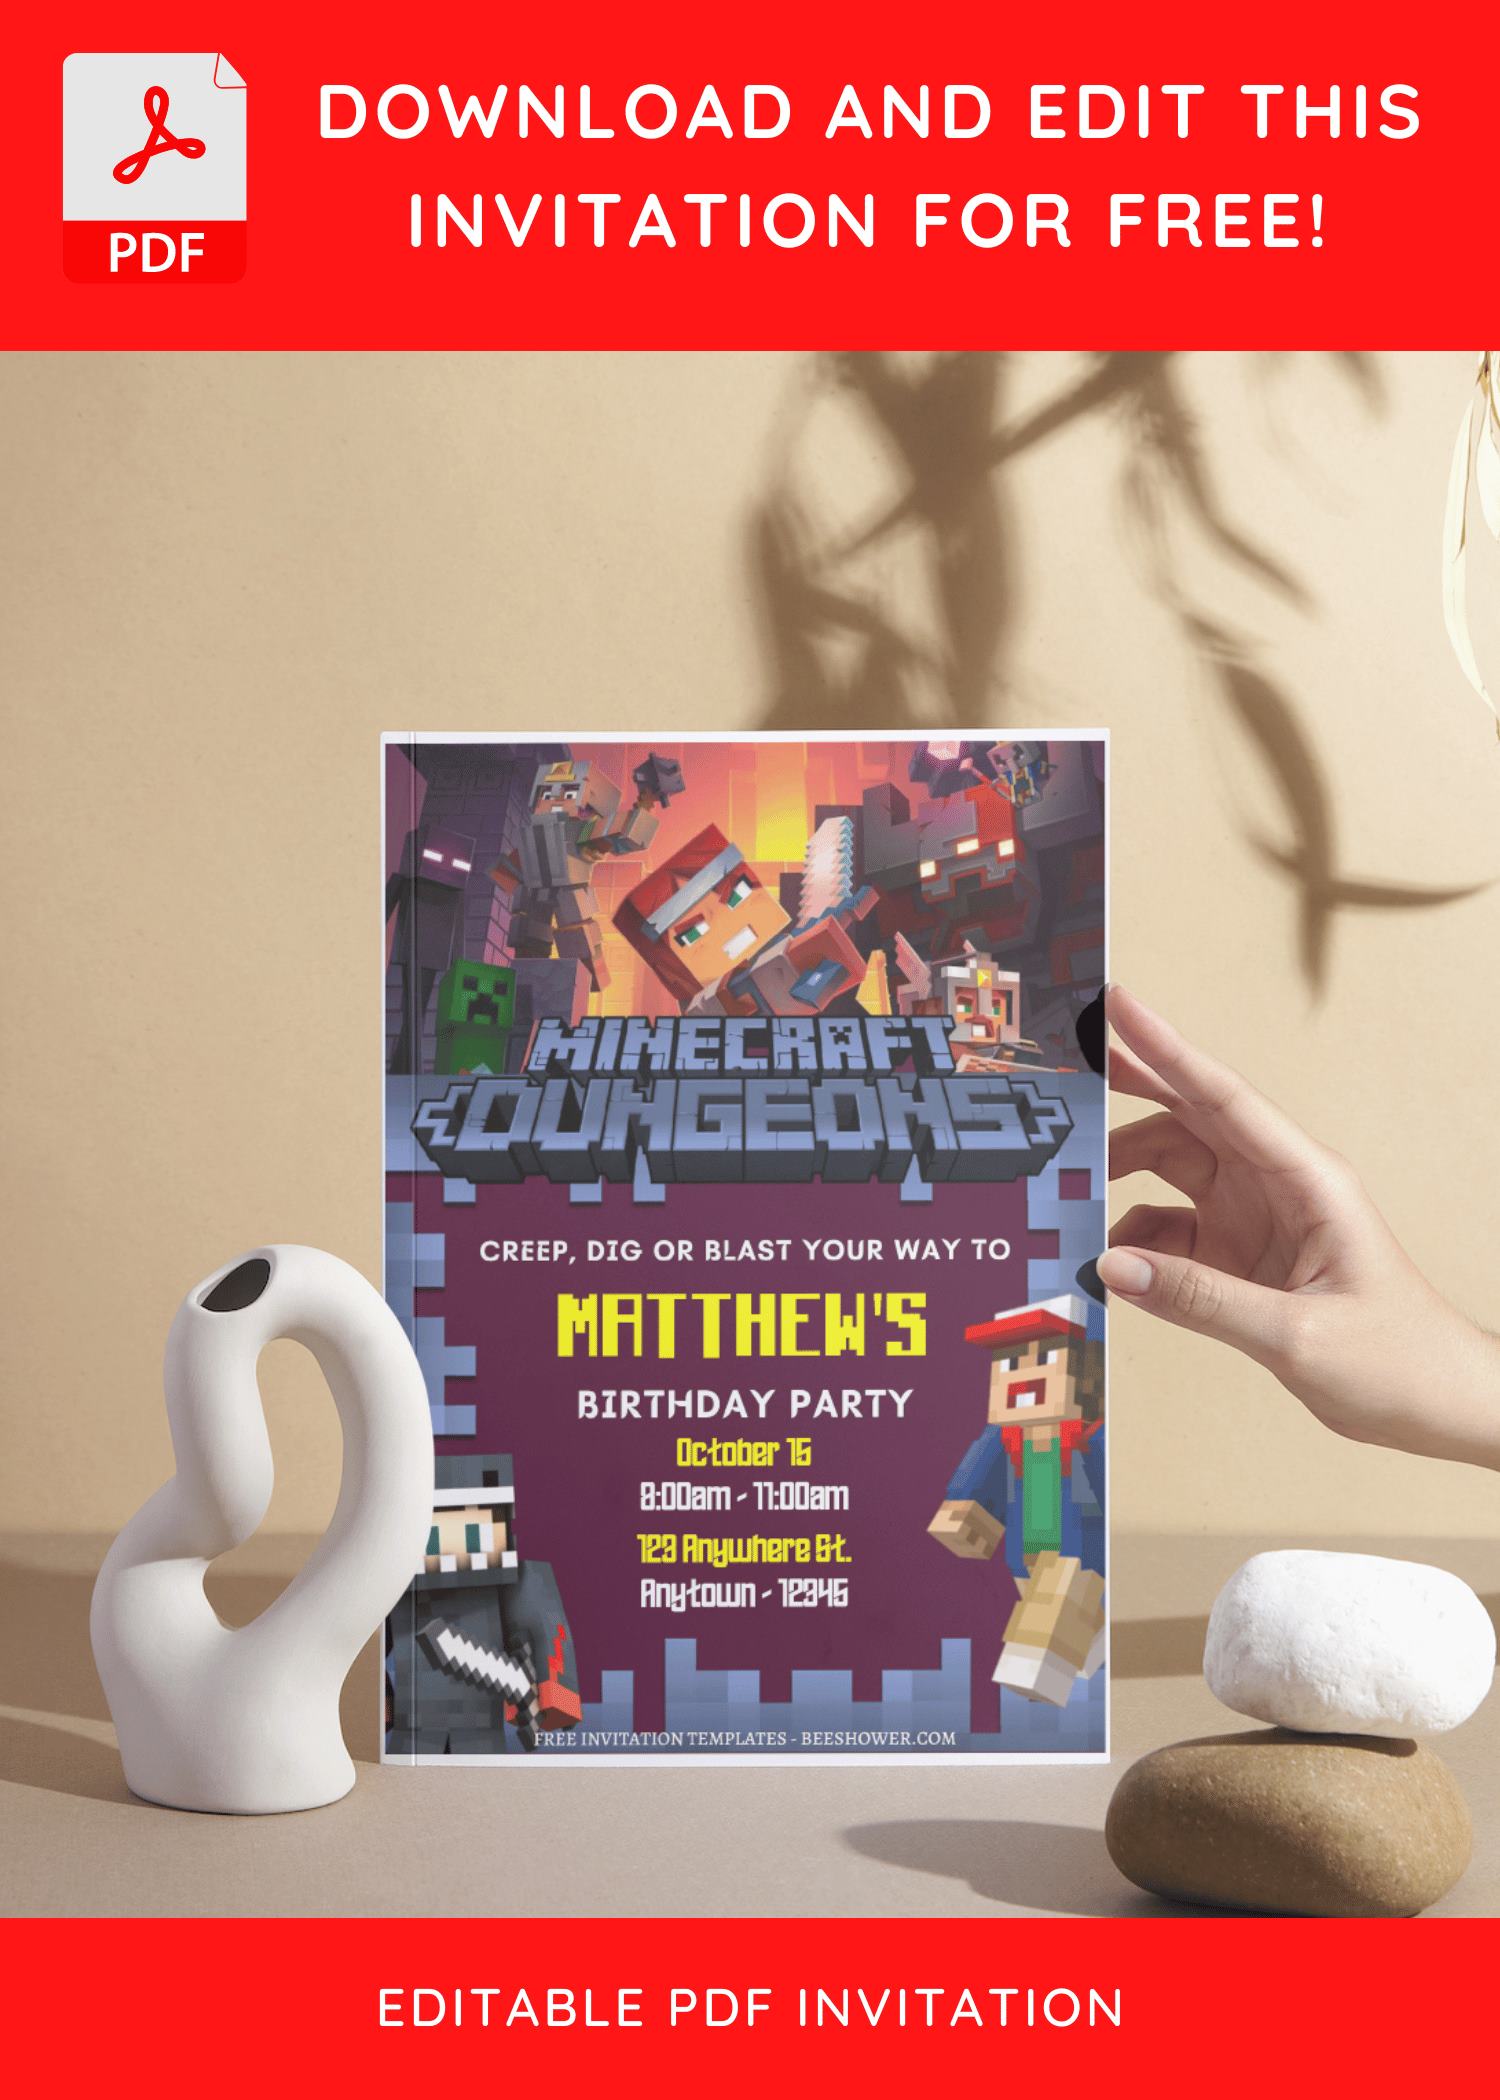 (Free Editable PDF) Pixelated Fun Minecraft Baby Shower Invitation Templates C